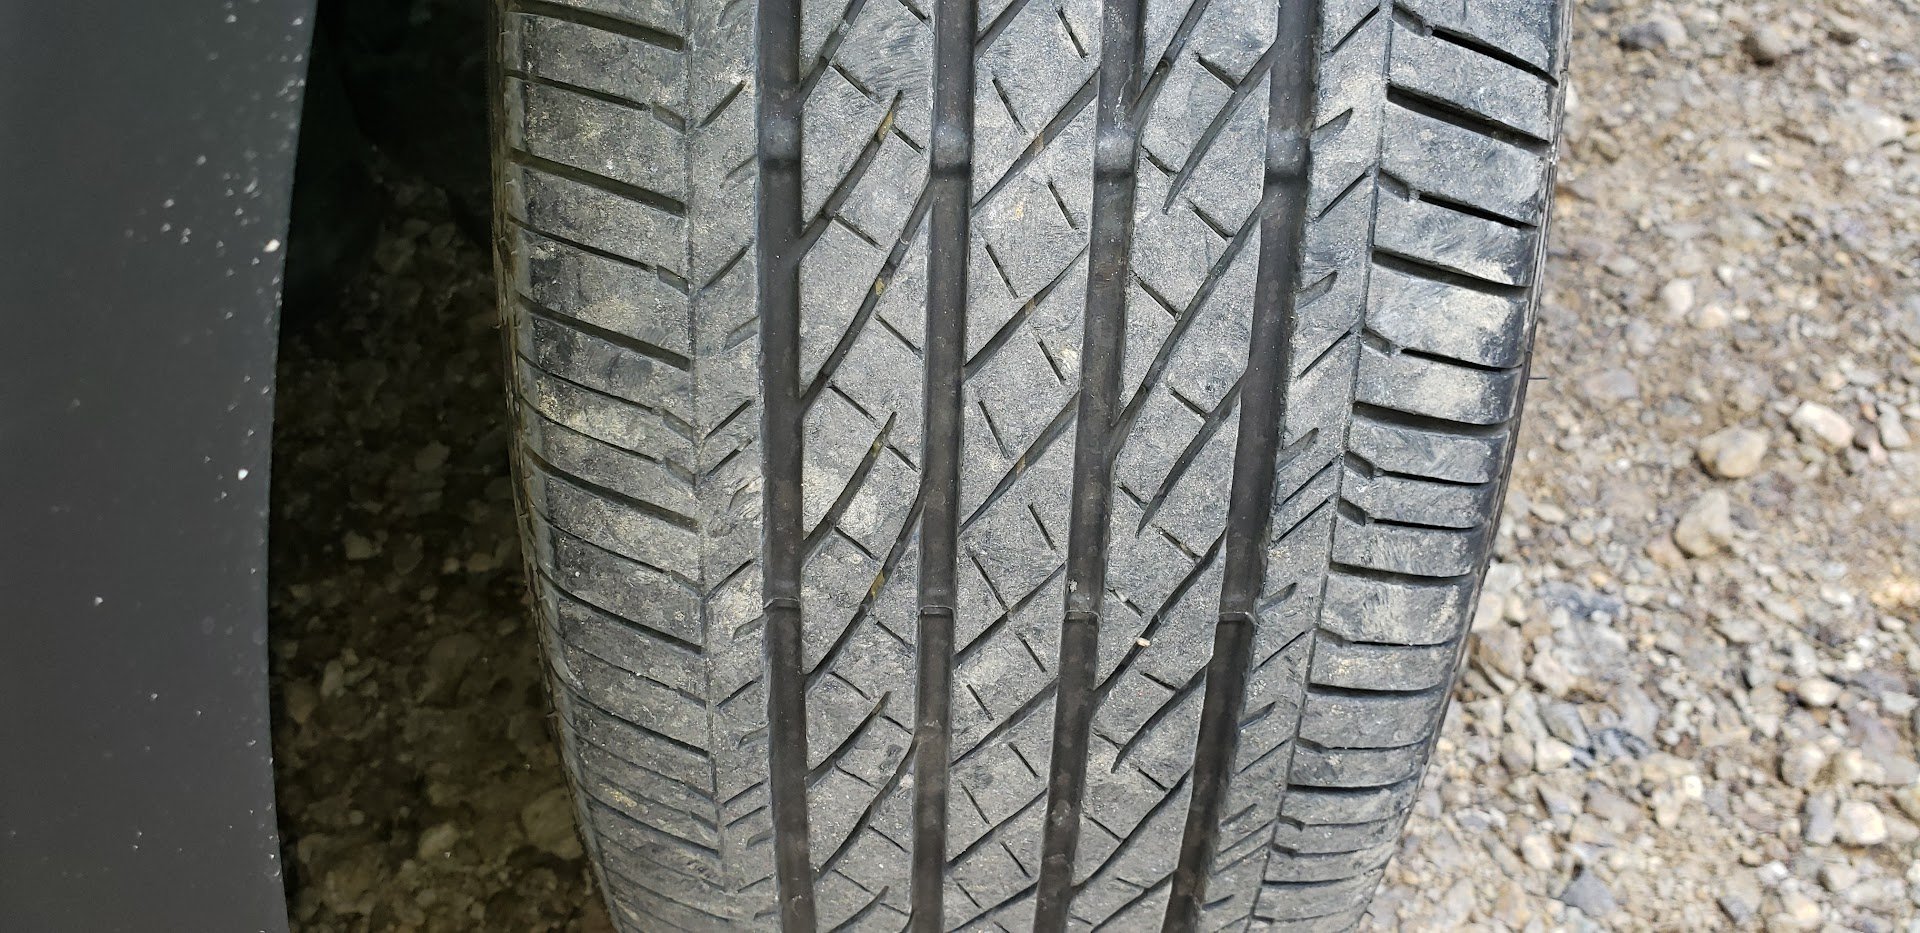 Image of Bridgestone Turanza EL440 tire tread by John Goreham